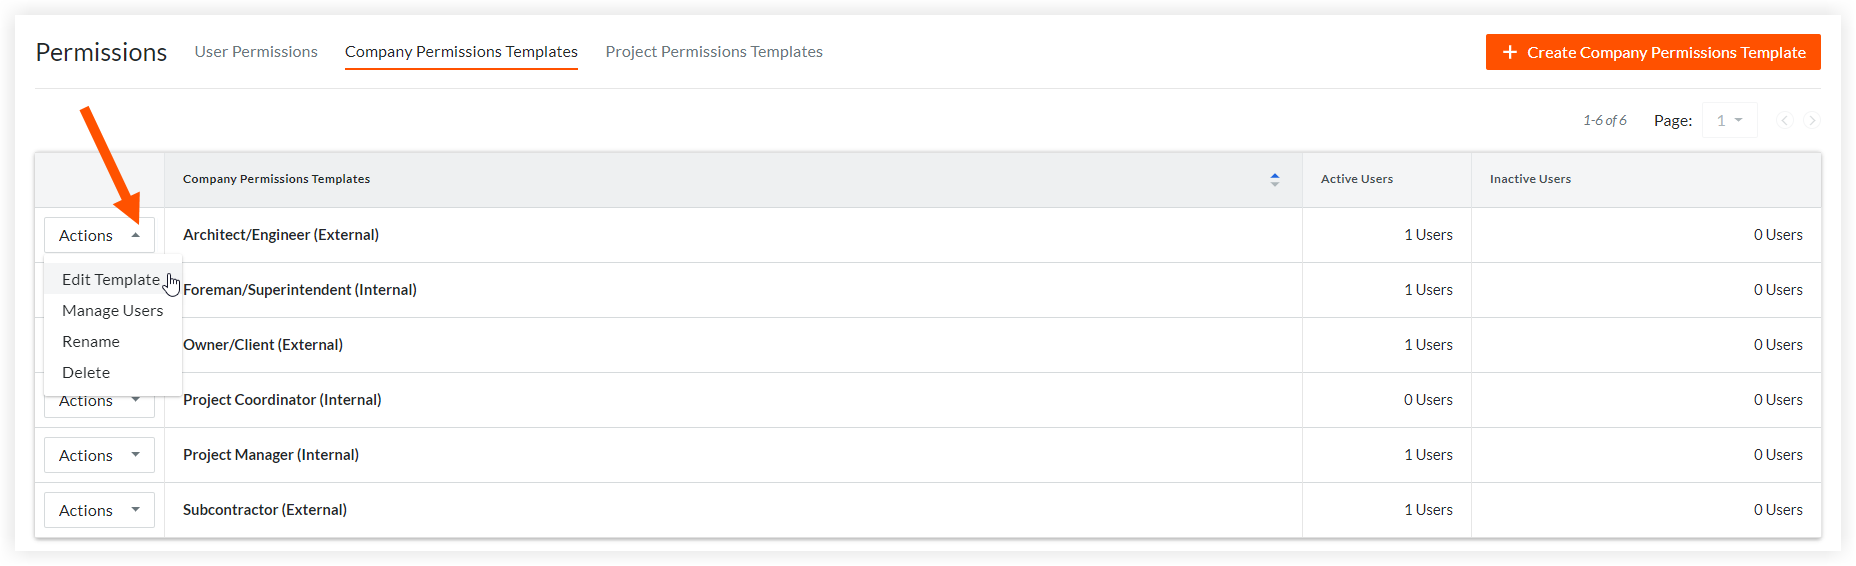 permissions-ann-company-permissions-templates-list.png